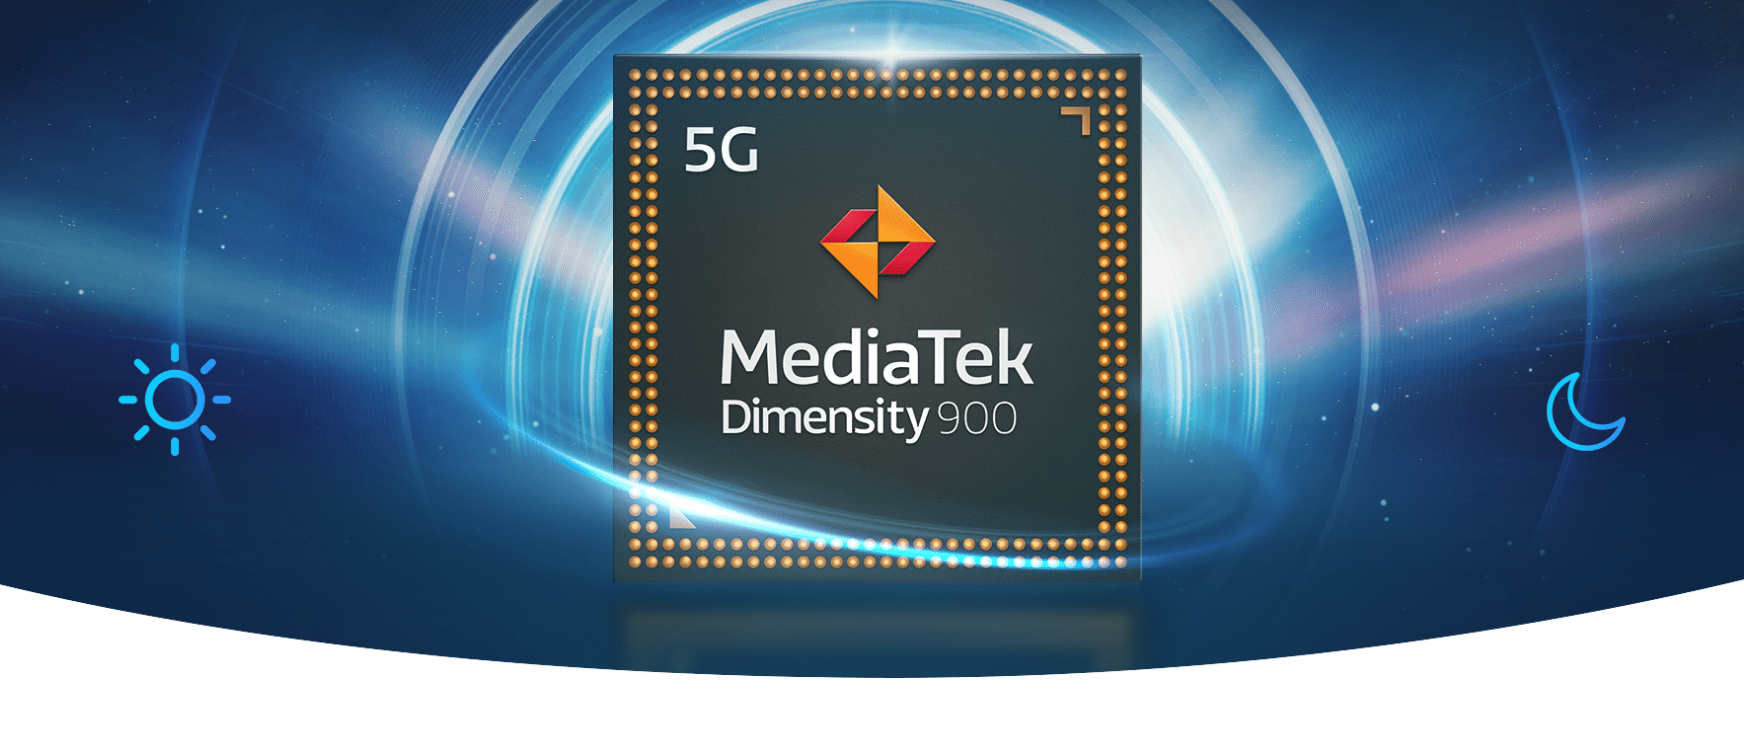 MediaTek、新ミドルレンジSoCのDimensity 900を発表